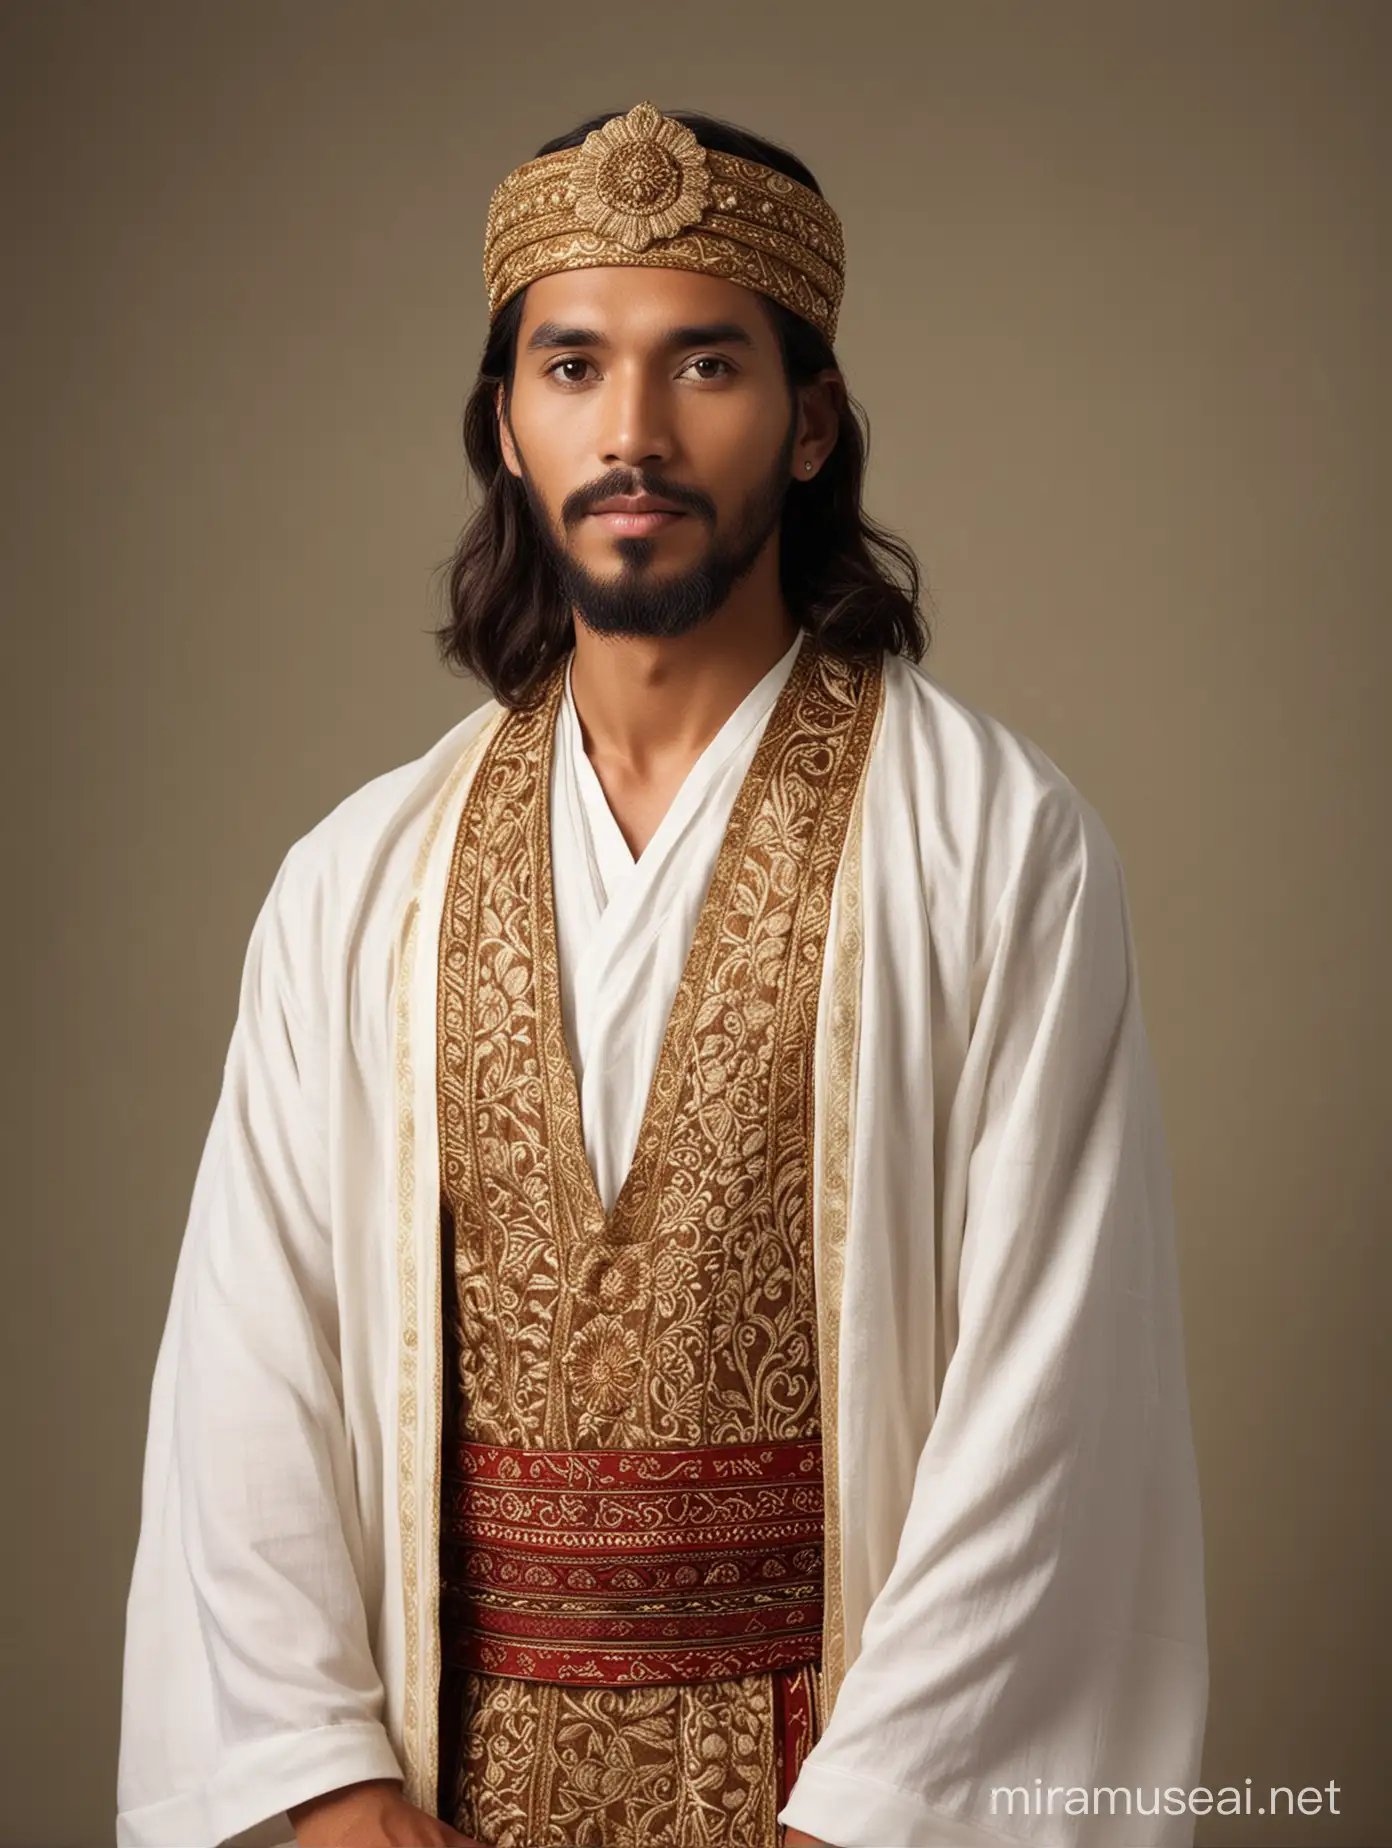 Jesus wearing traditional javanesse costume